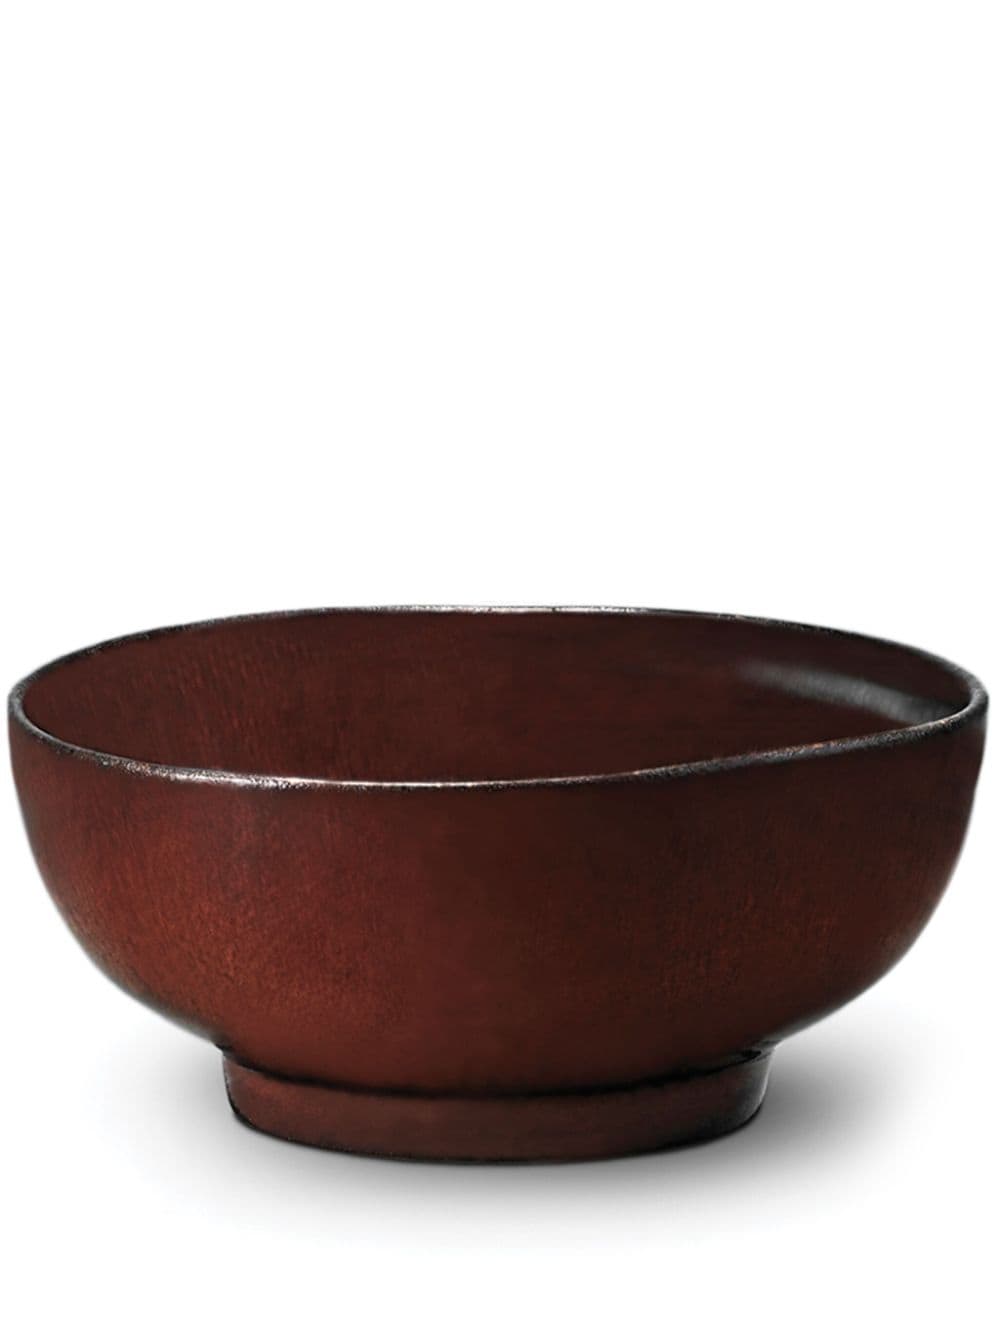 L'Objet Terra porcelain sauce bowl (9cm) - Red von L'Objet